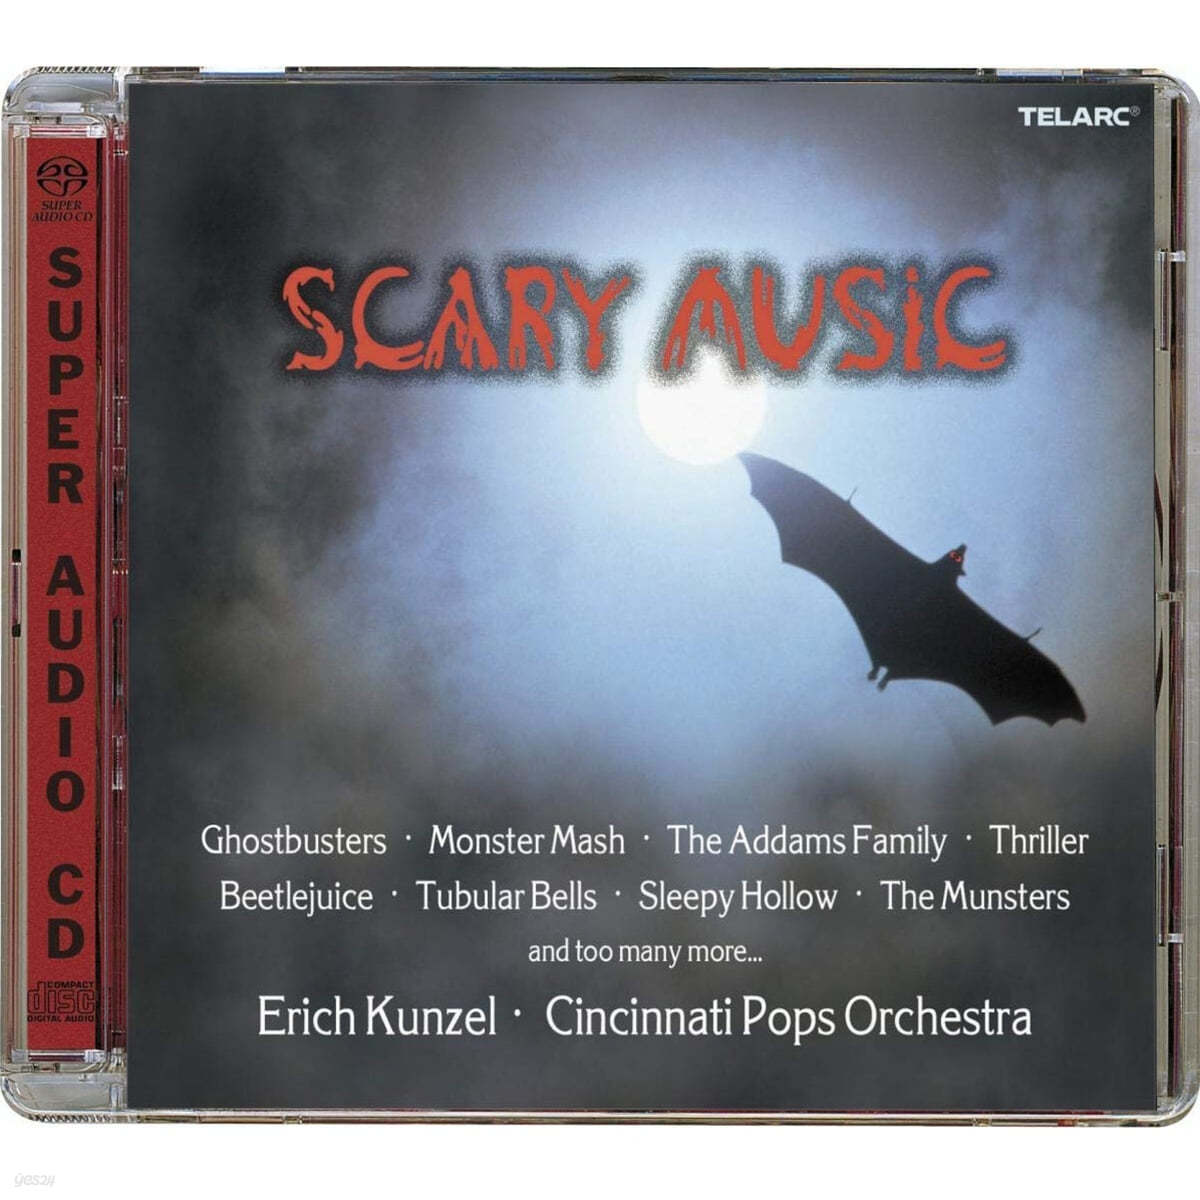 Erich Kunzel 공포 영화속의 배경음악 - 에리히 쿤젤 (Scary Music) 